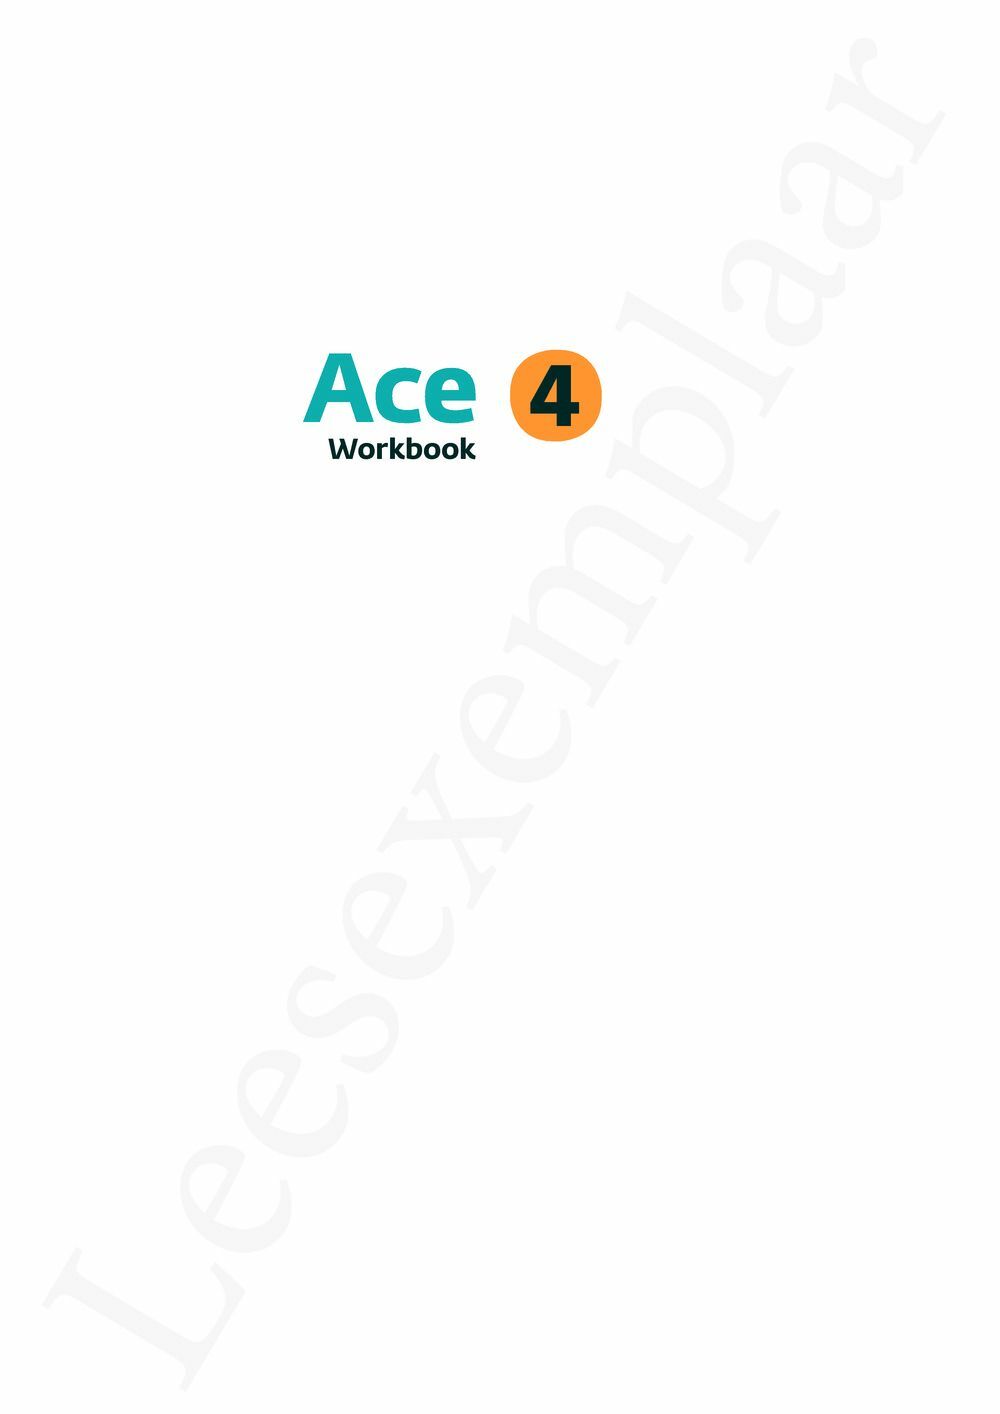 Preview: Ace 4 Workbook (incl. Ace Essential Grammar en Pelckmans Portaal)